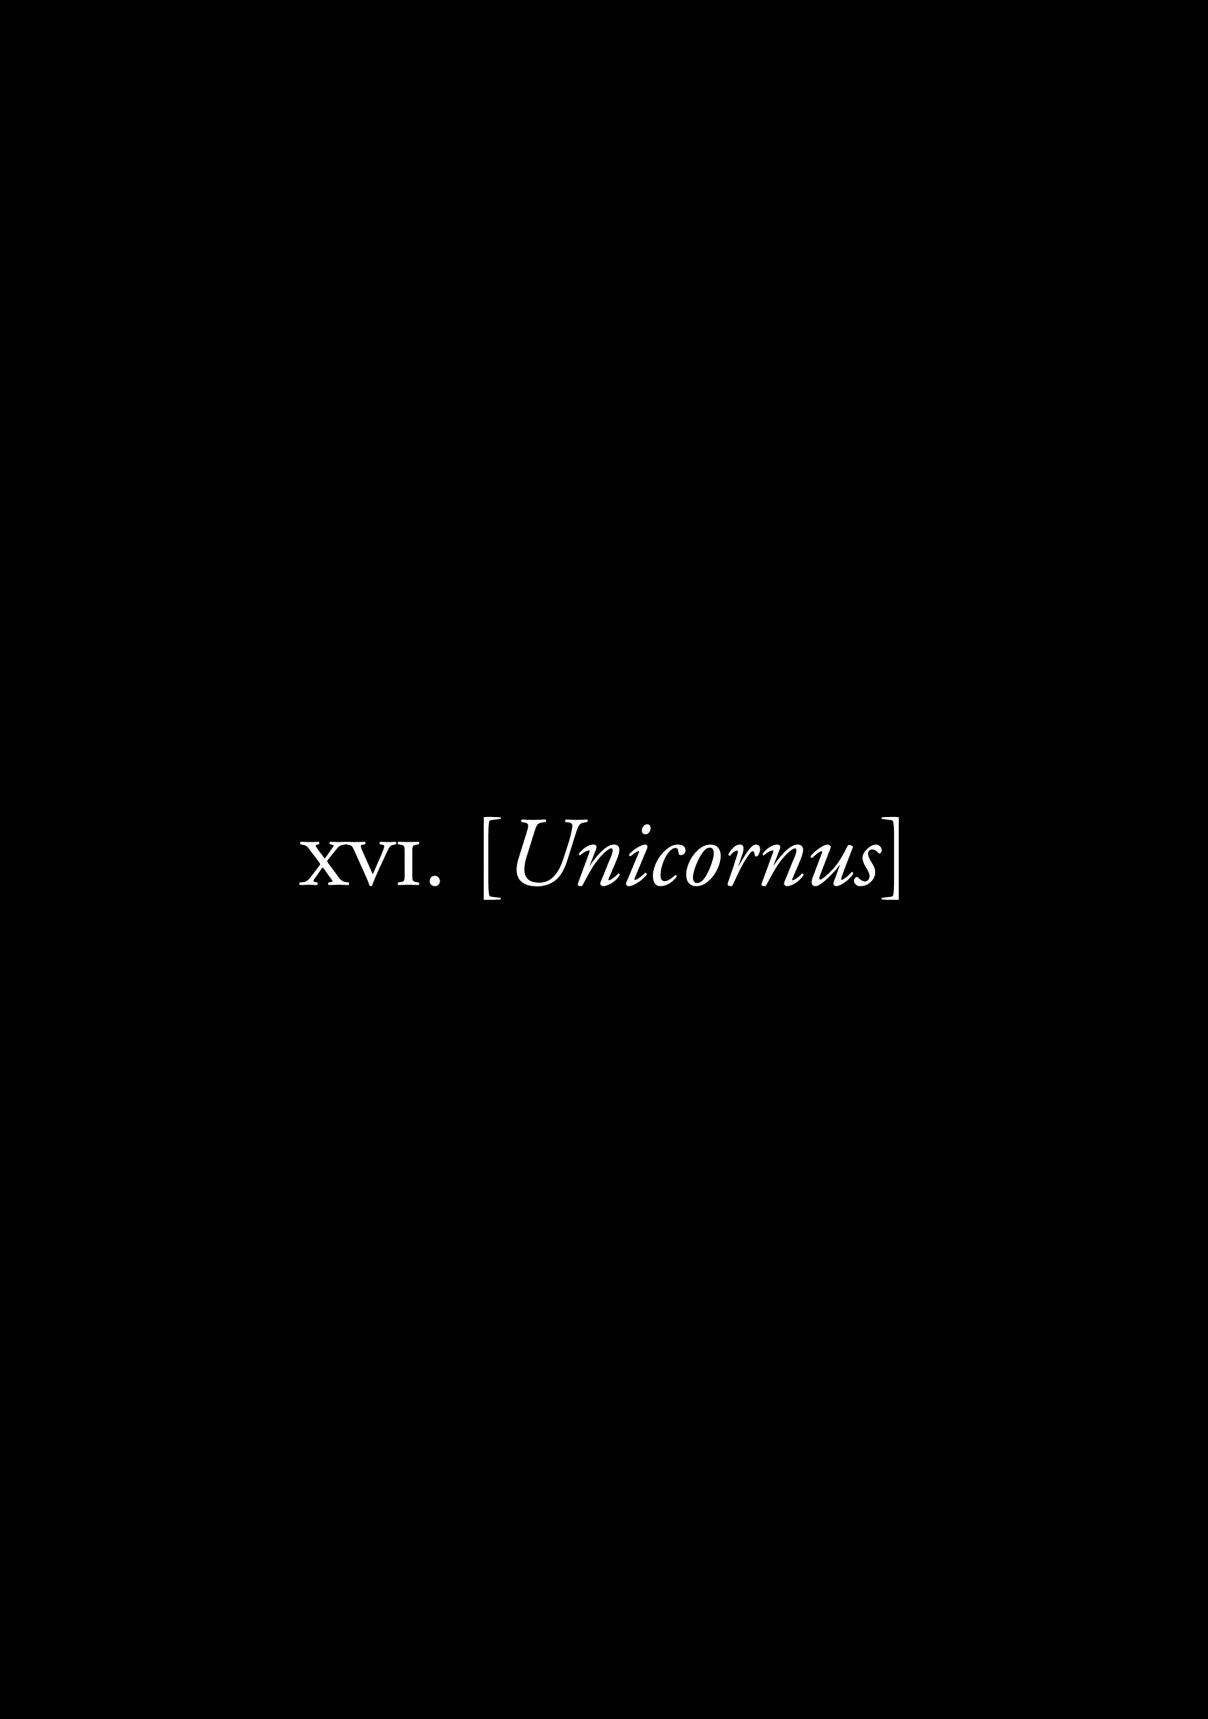 Plinivs Vol. 3 Ch. 16 Unicornus